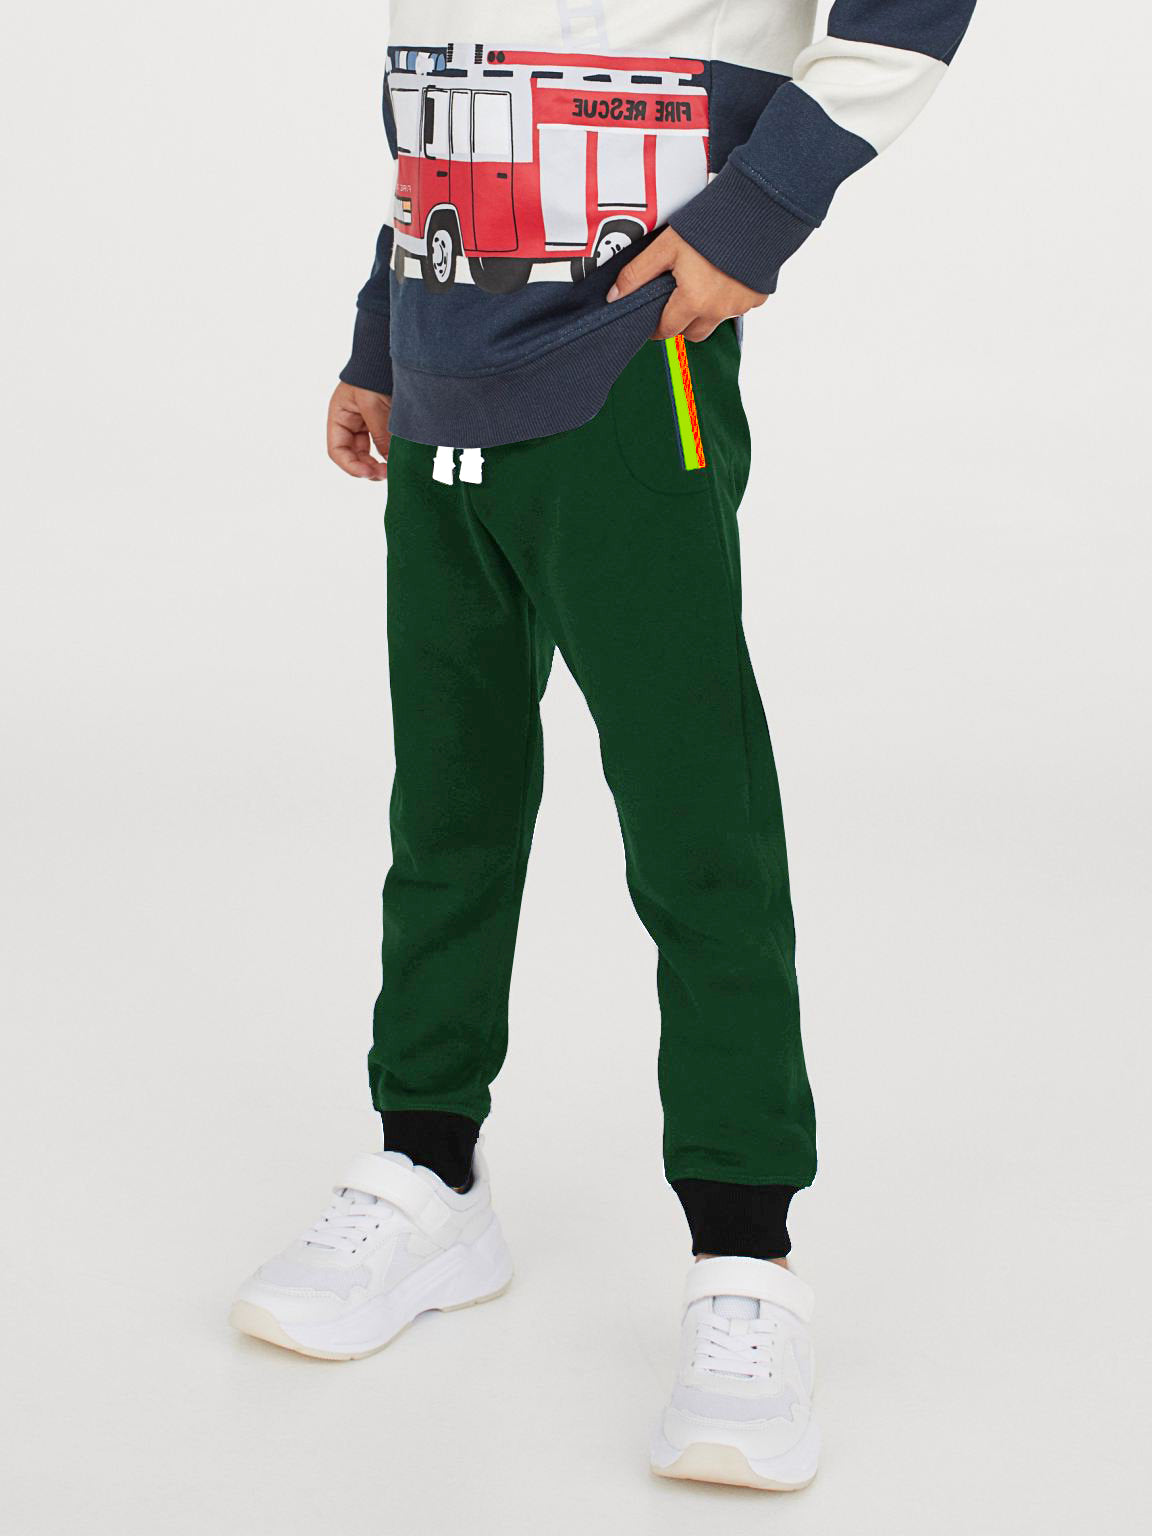 ADS Fleece Slim Fit Jogger Trouser For Kids-Green & Black With Assorted Pockets-SP908